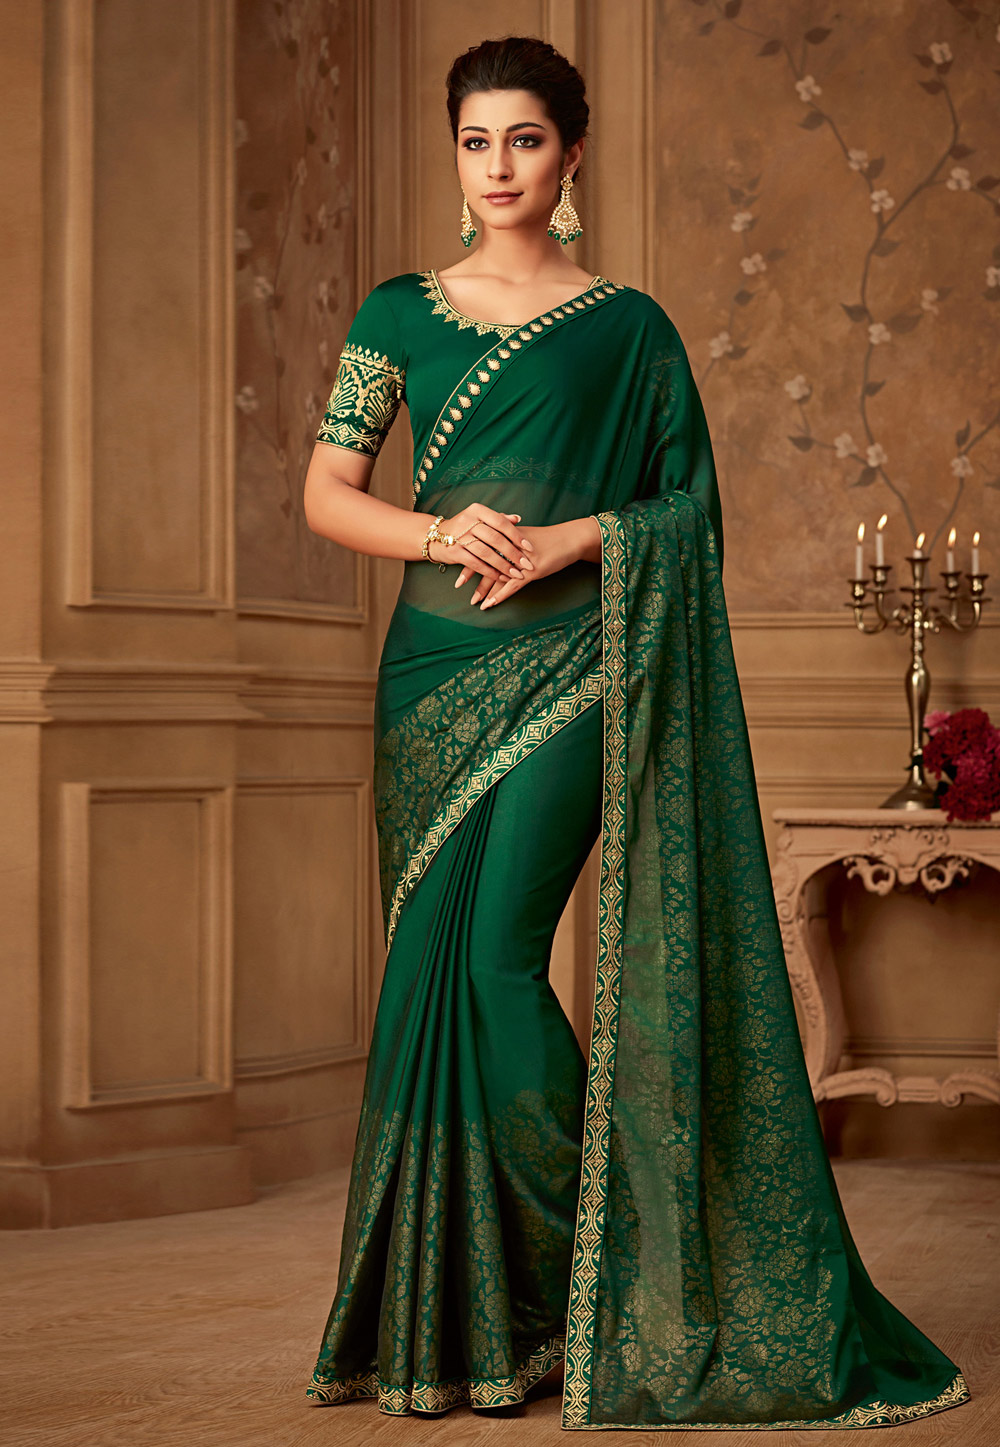 Картинка сари. Индийское Сари. Индийское Сари зеленое. Сари индийская одежда. Индийское Сари Королевское.